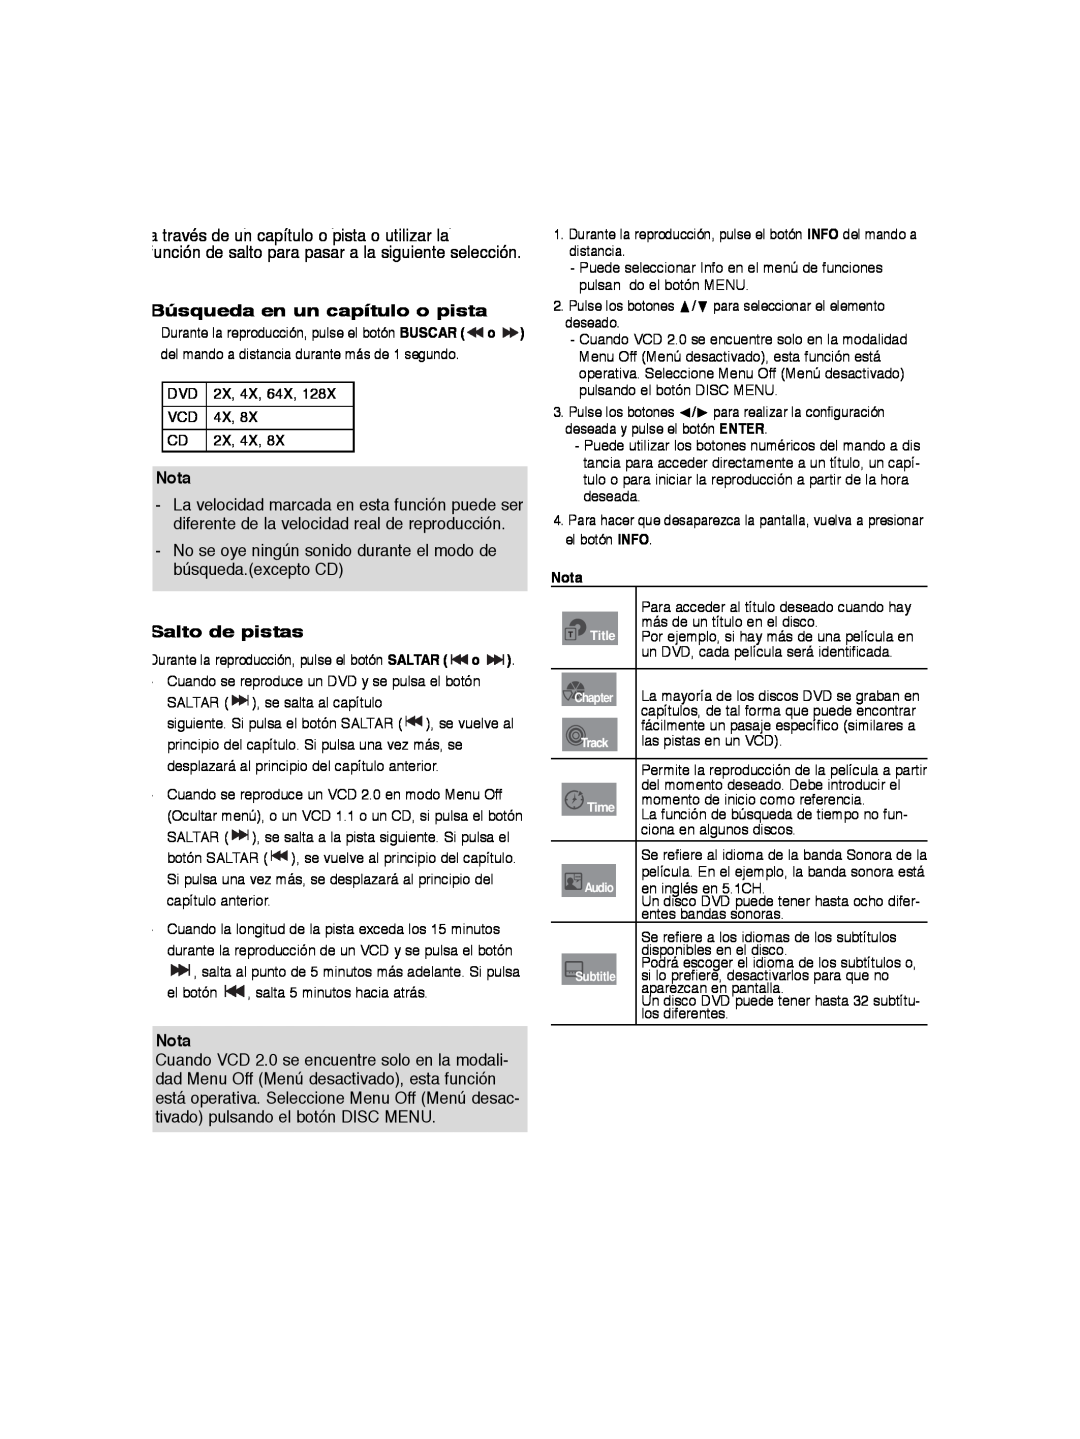 Samsung DVD-P260K/AFR manual Búsqueda en un capítulo o pista, Salto de pistas, Nota 